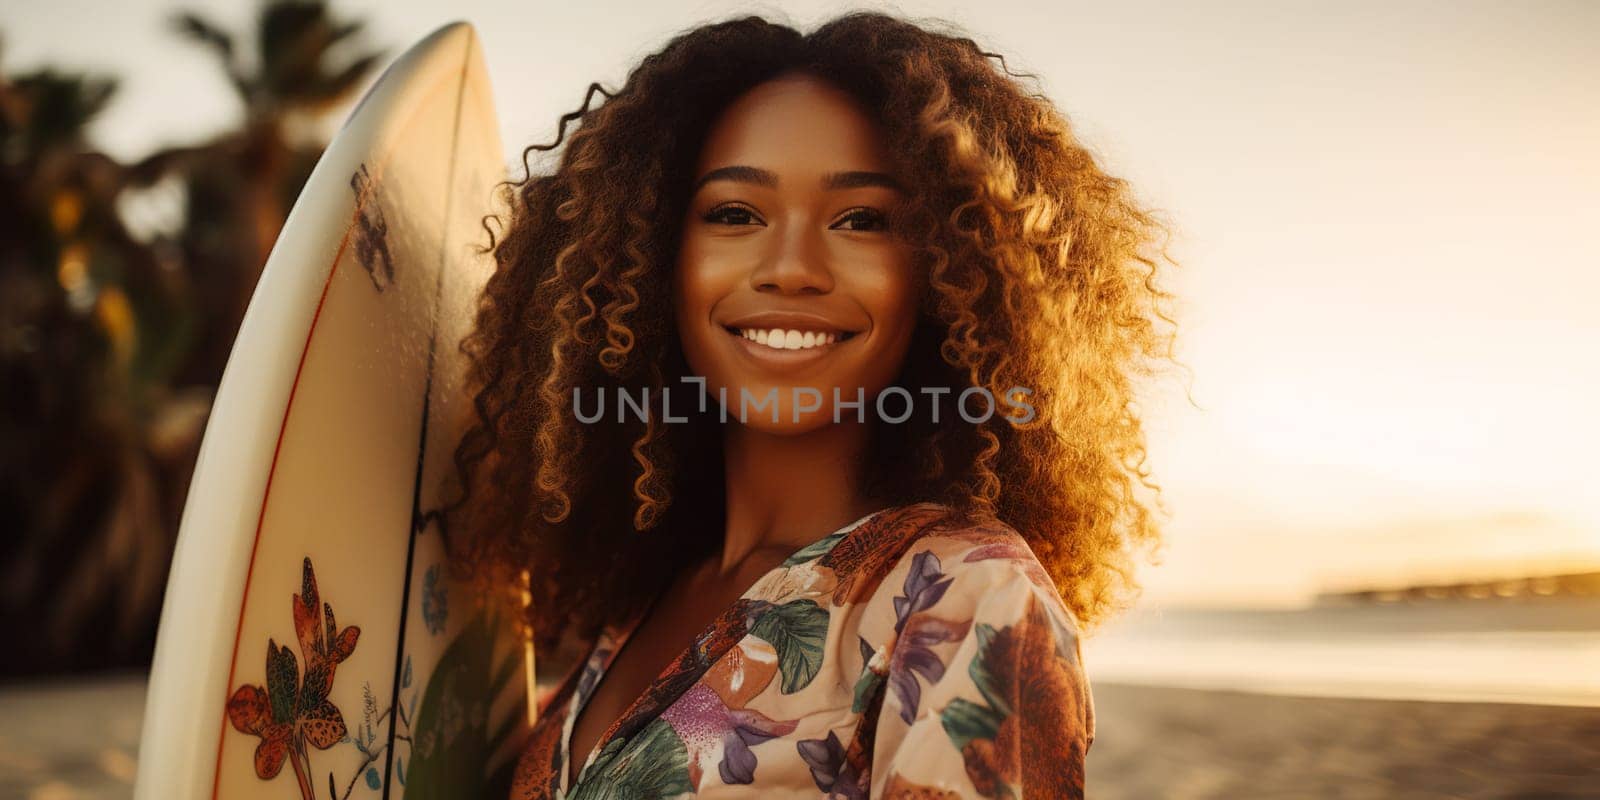 African American woman wearing a bikini in a beach setting - generative AI - AI generated